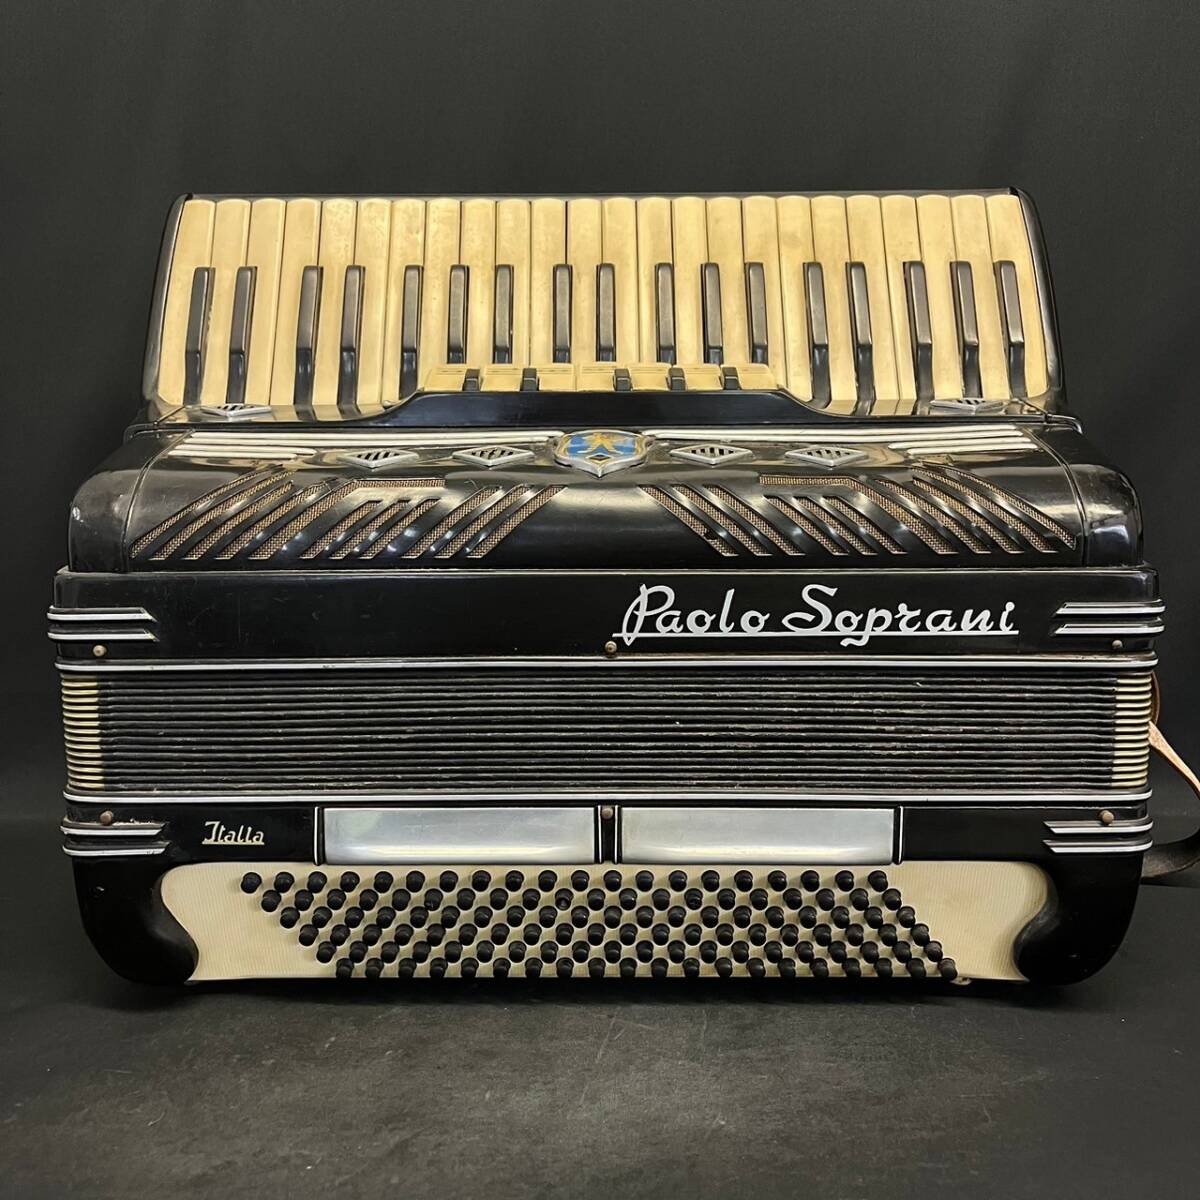 BCd087I 120 Paolo Soprani パオロ ソプラーニ アコーディオン 24鍵盤 17ベース イタリア Italia 昭和レトロ アンティーク 鍵盤楽器 音楽の画像2